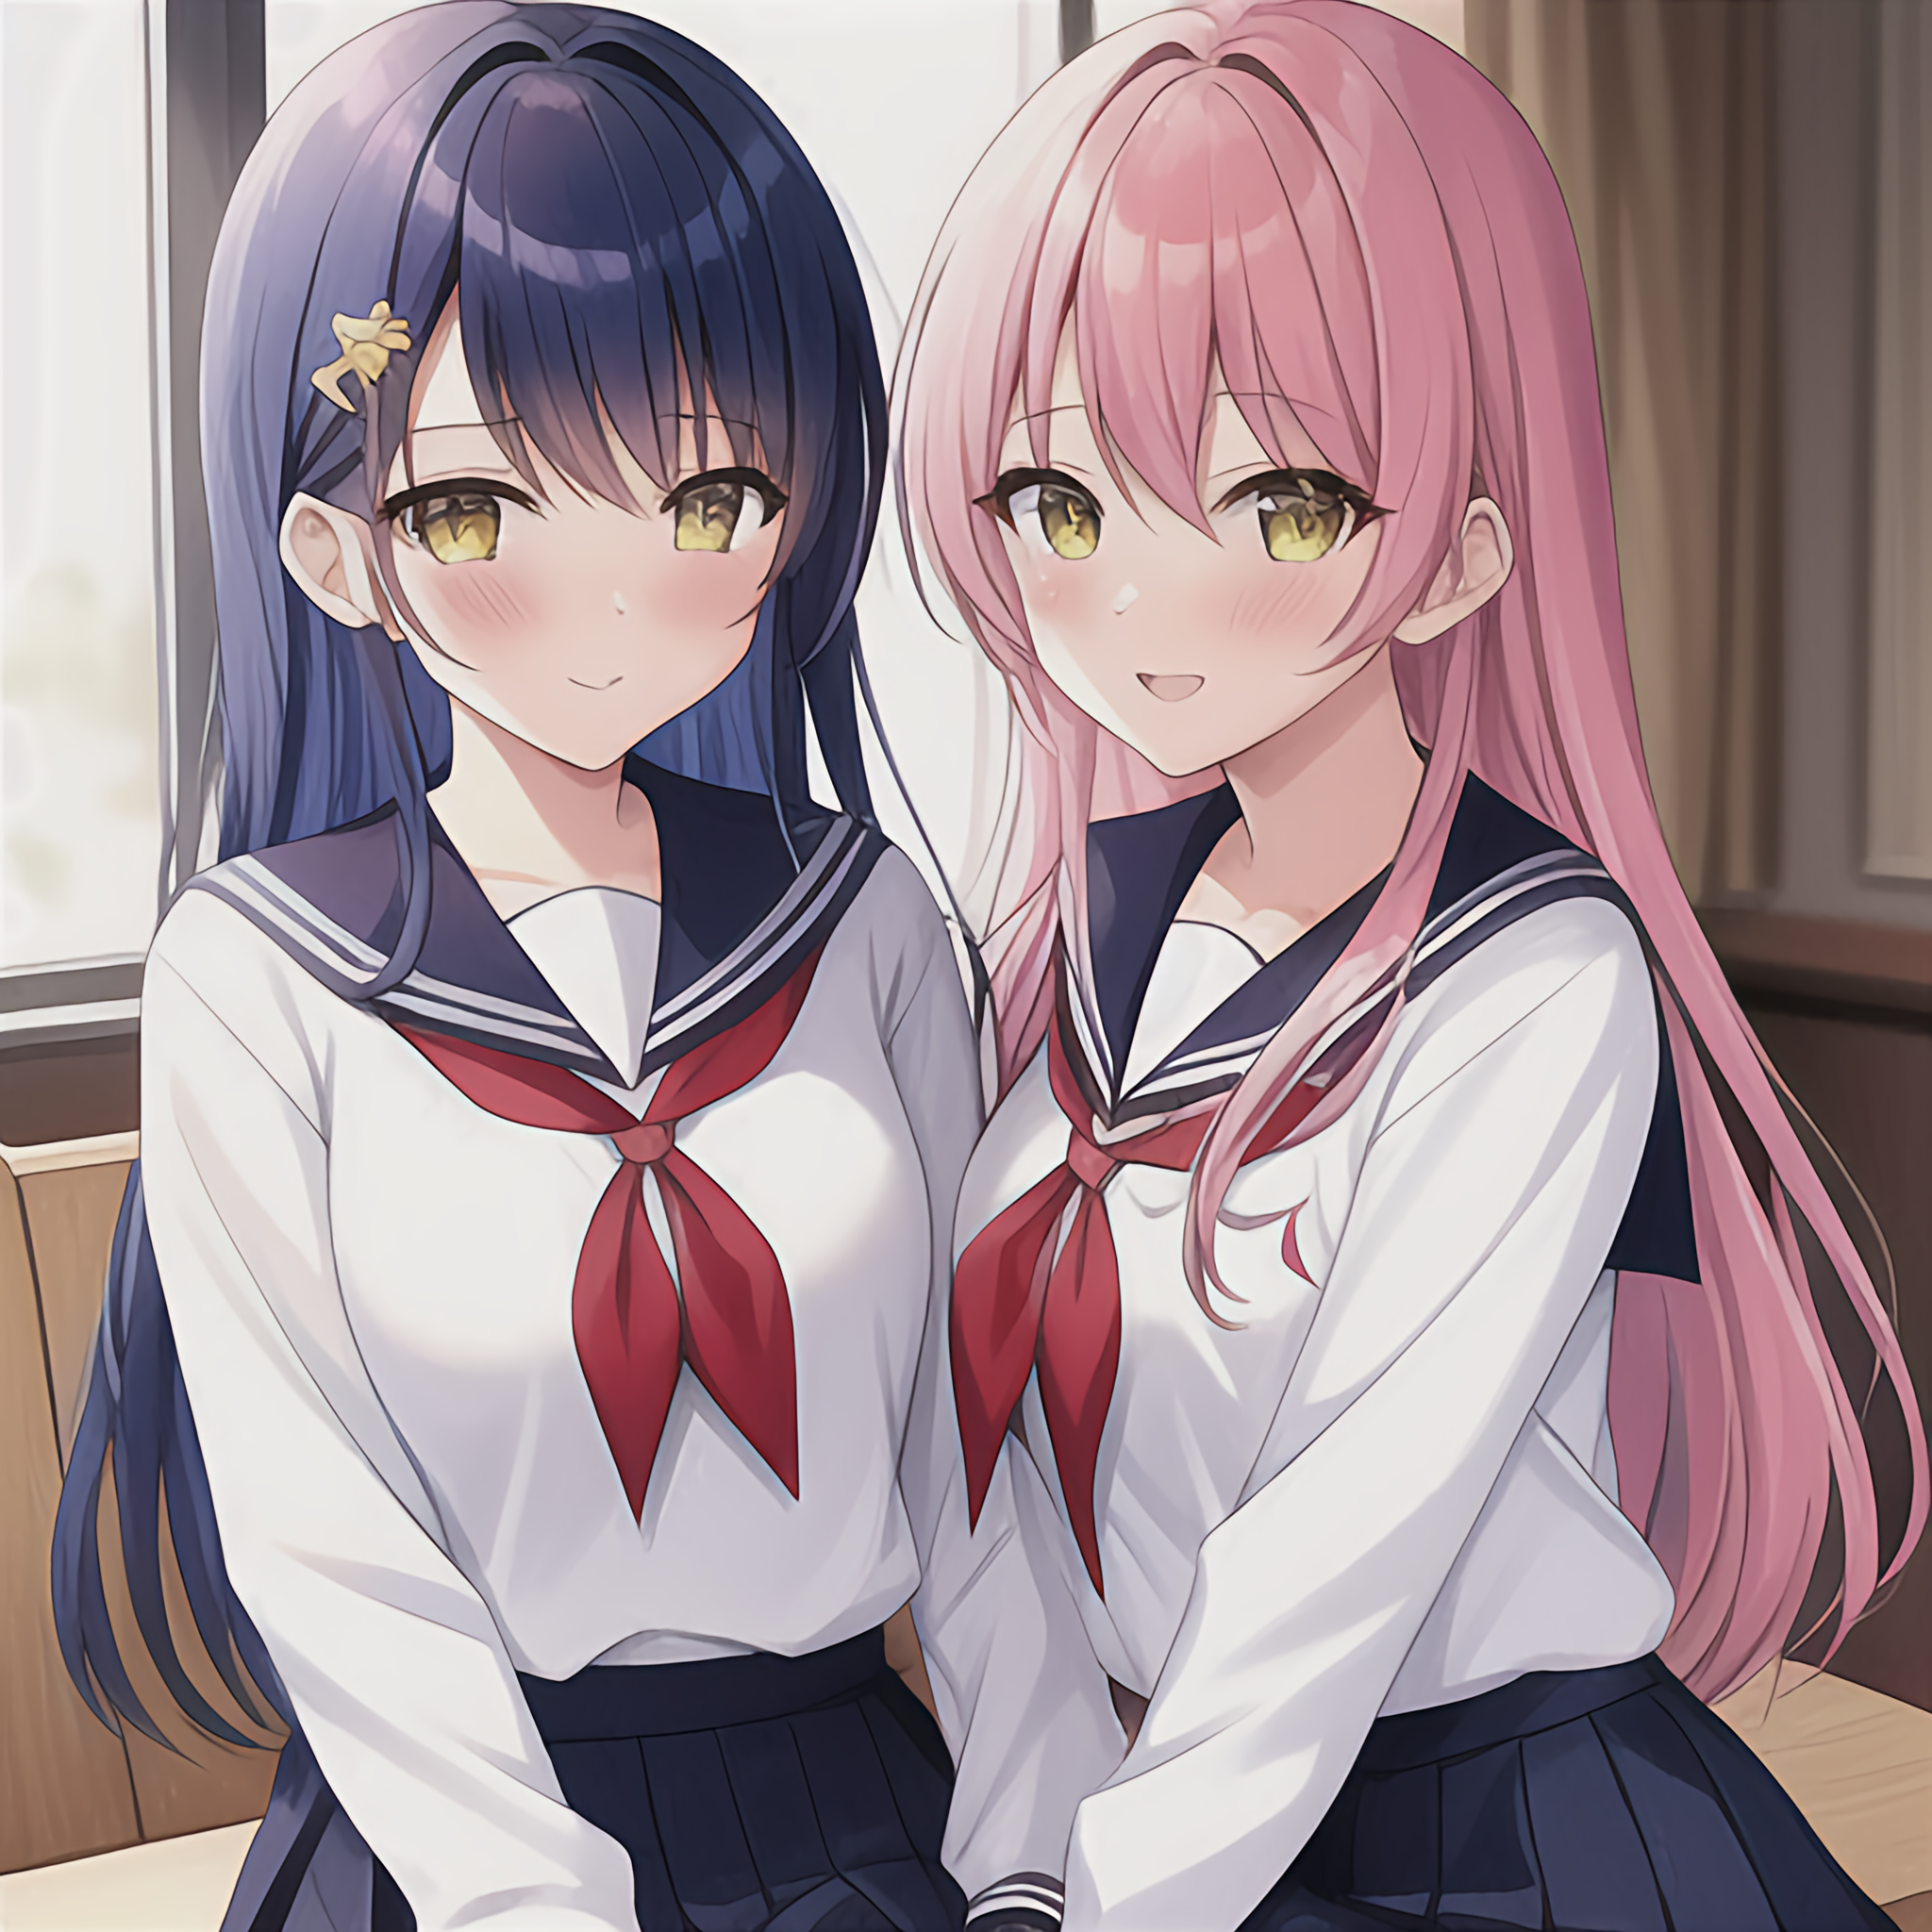 Anime 2048x2048 anime anime girls Stable Diffusion AI art artwork digital art schoolgirl school uniform blushing looking at viewer